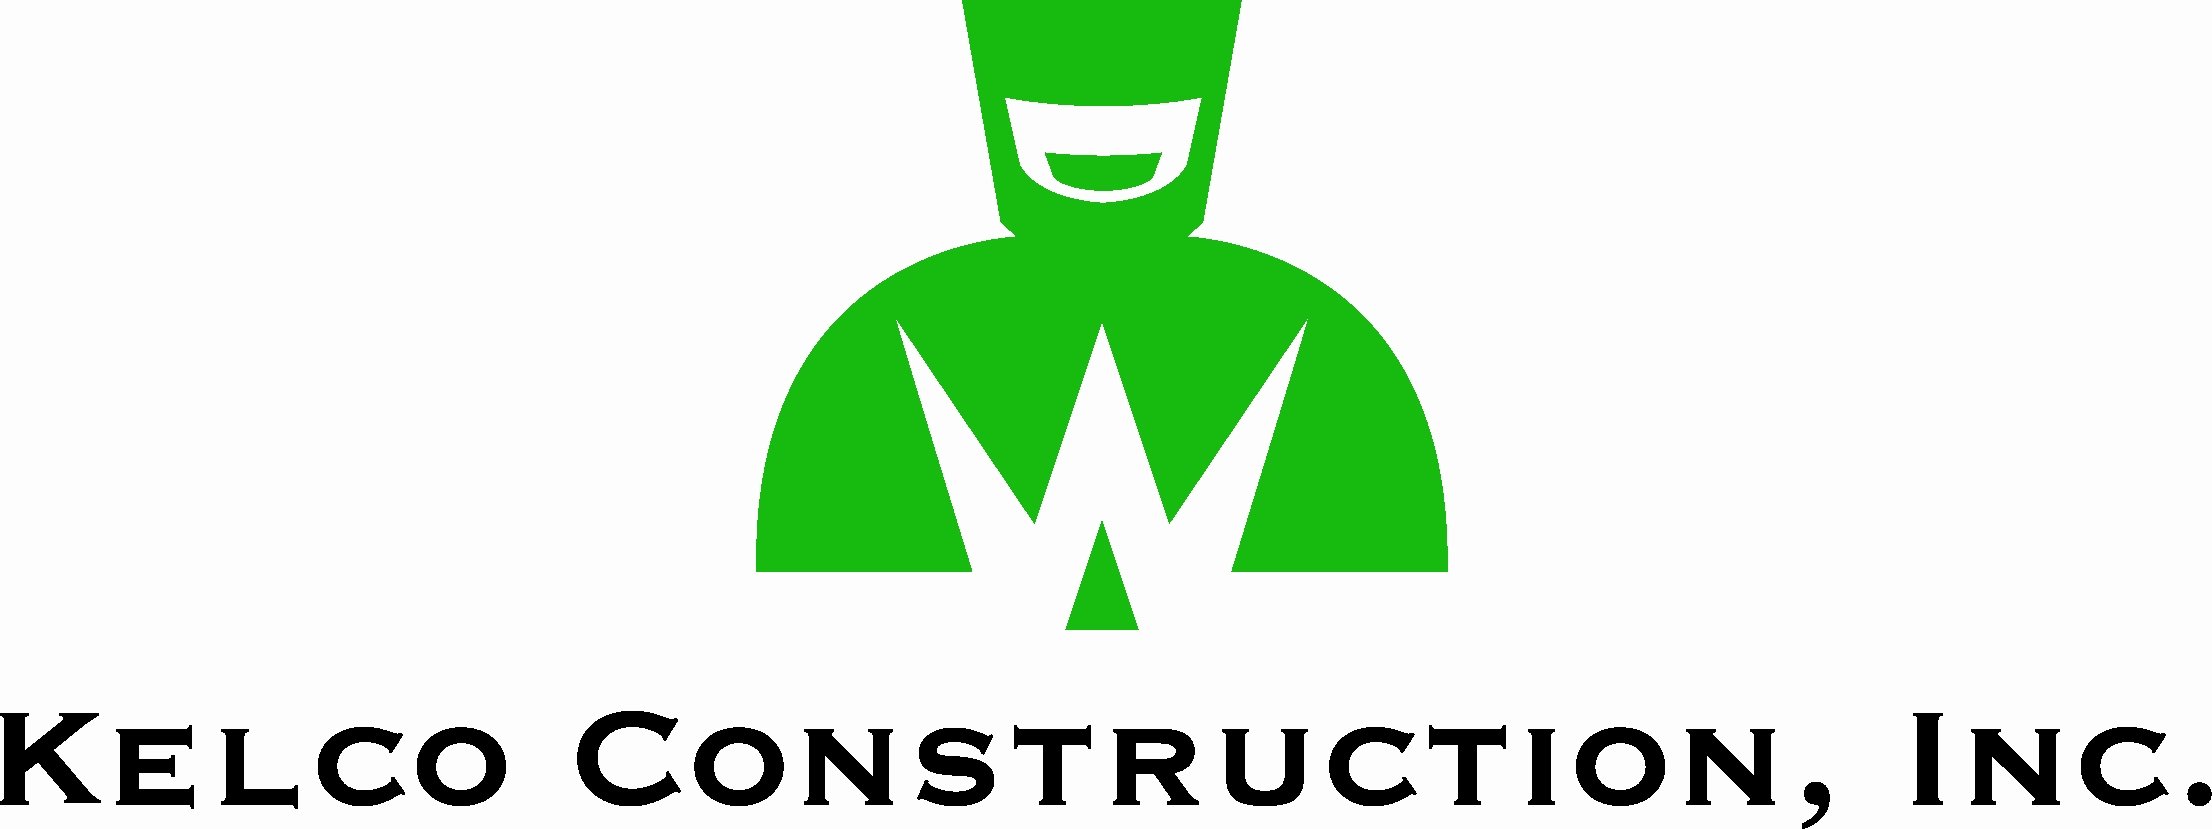 Kelco Construction, Inc Logo